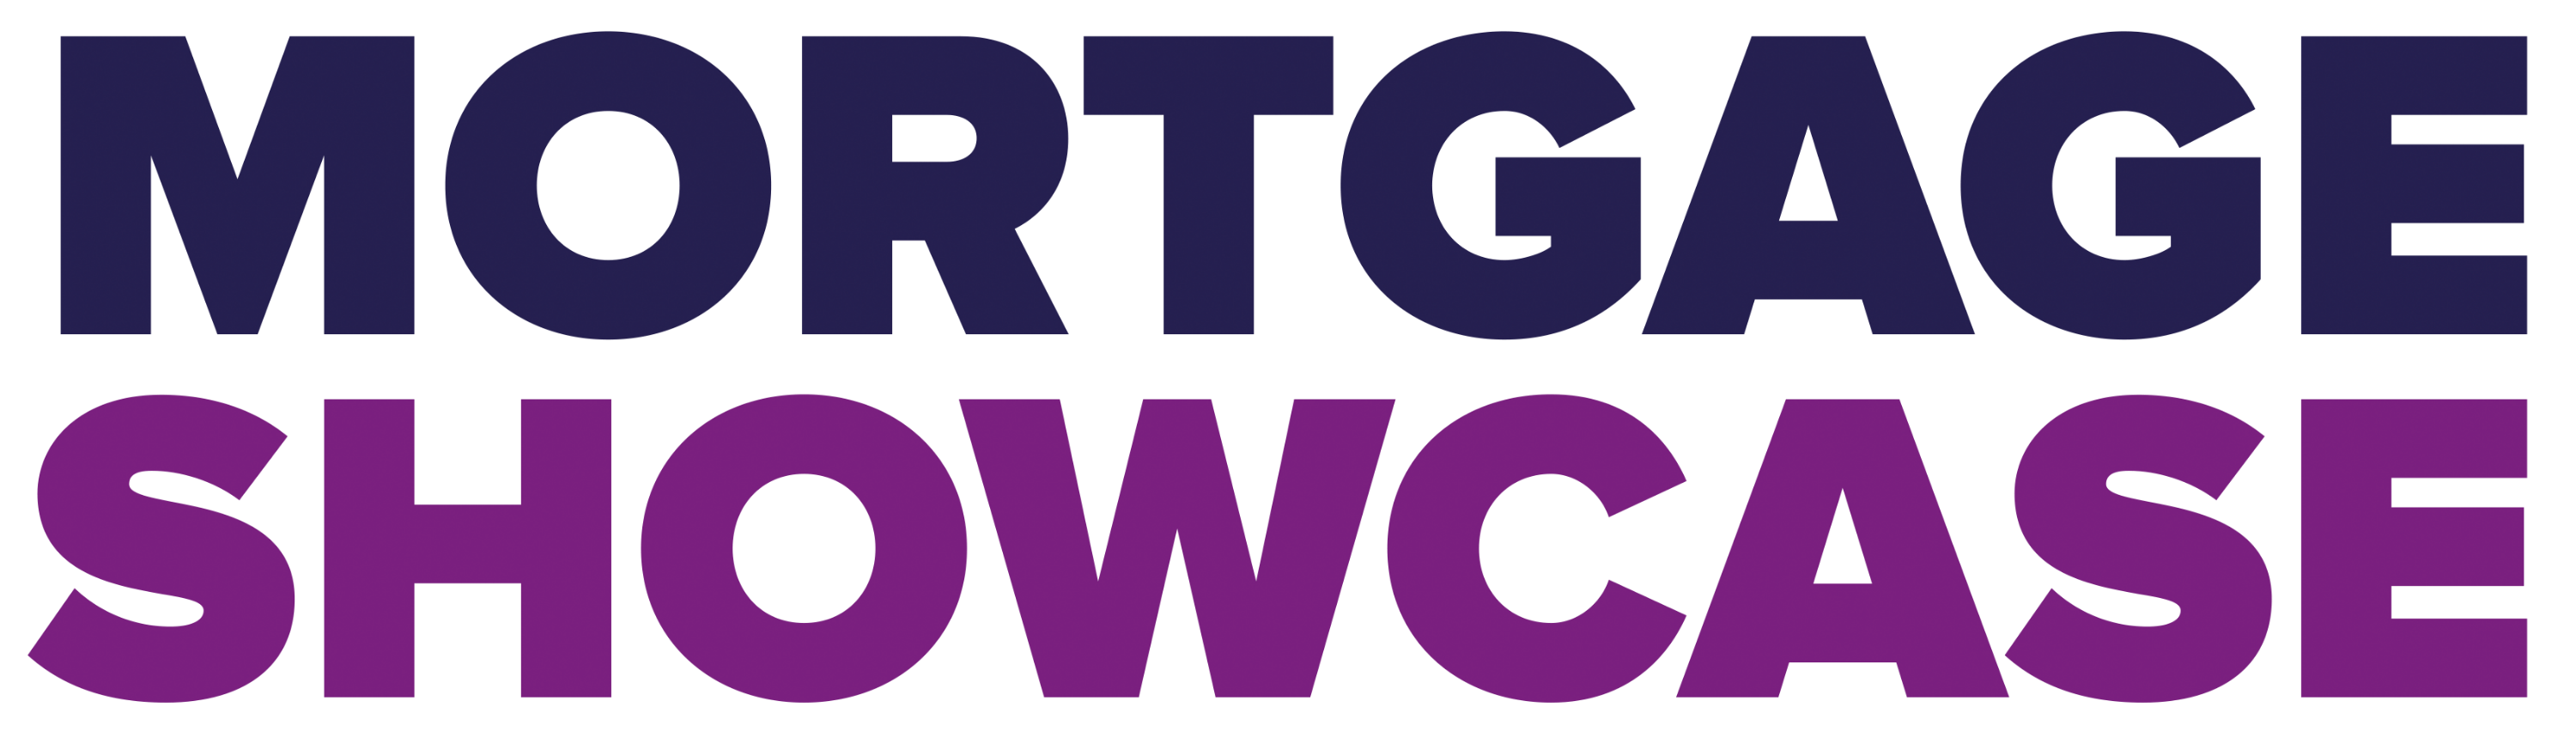 mortgage-showcase-scotland